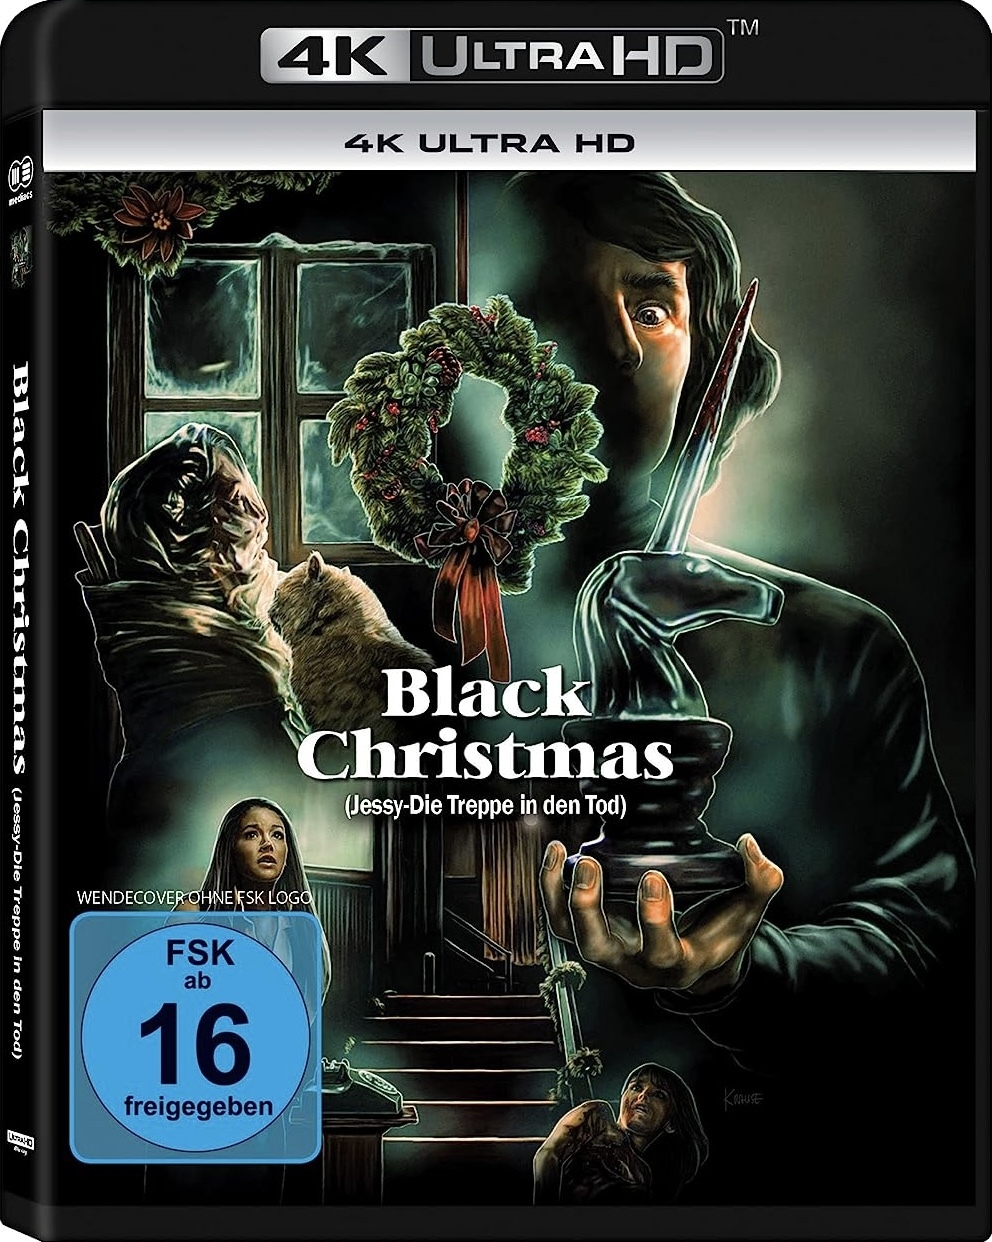 Black Friday Blu-ray (Limited Edition) (Germany)